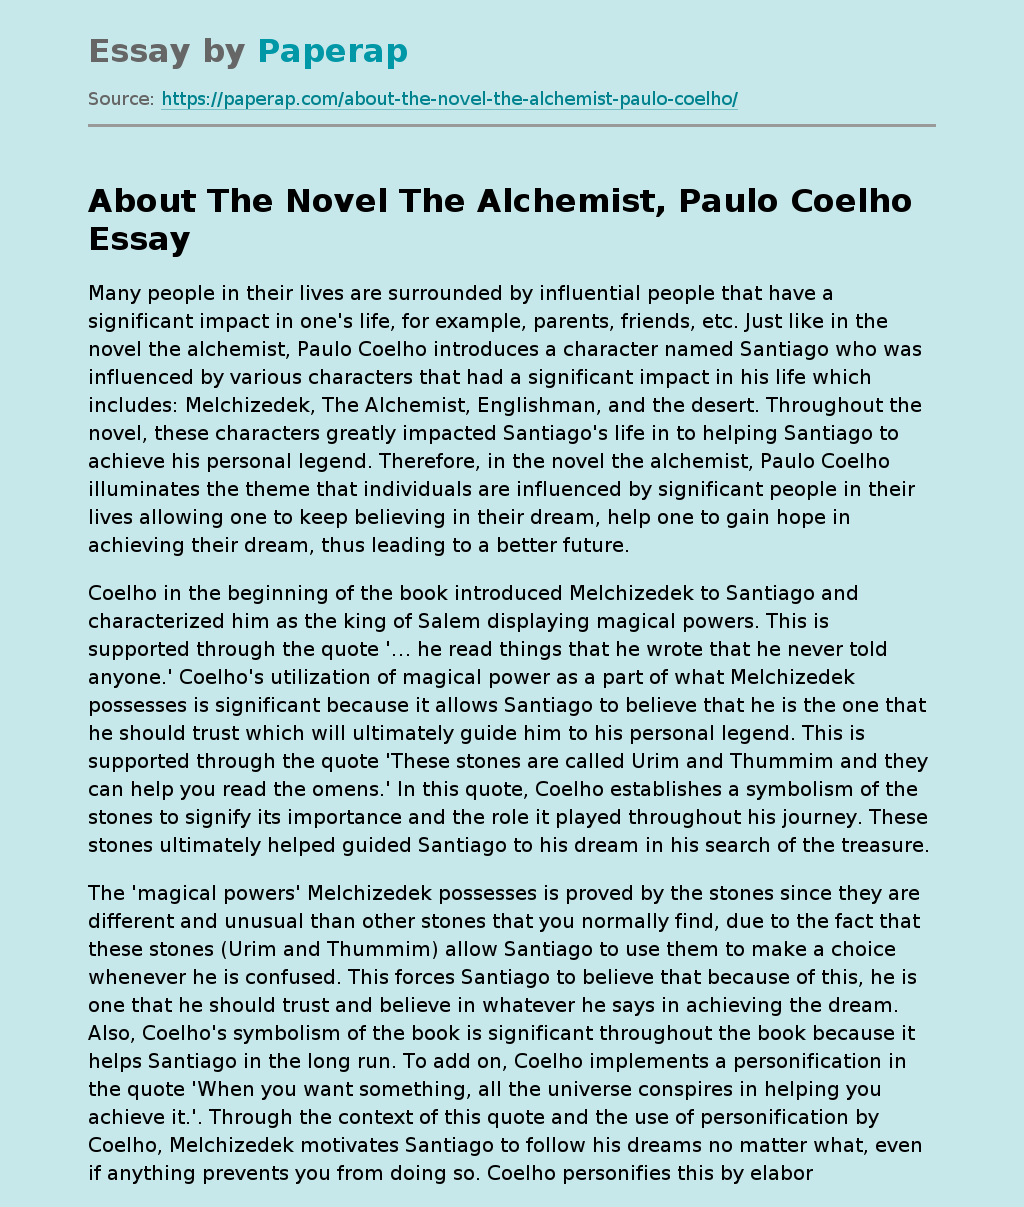 About The Novel The Alchemist, Paulo Coelho